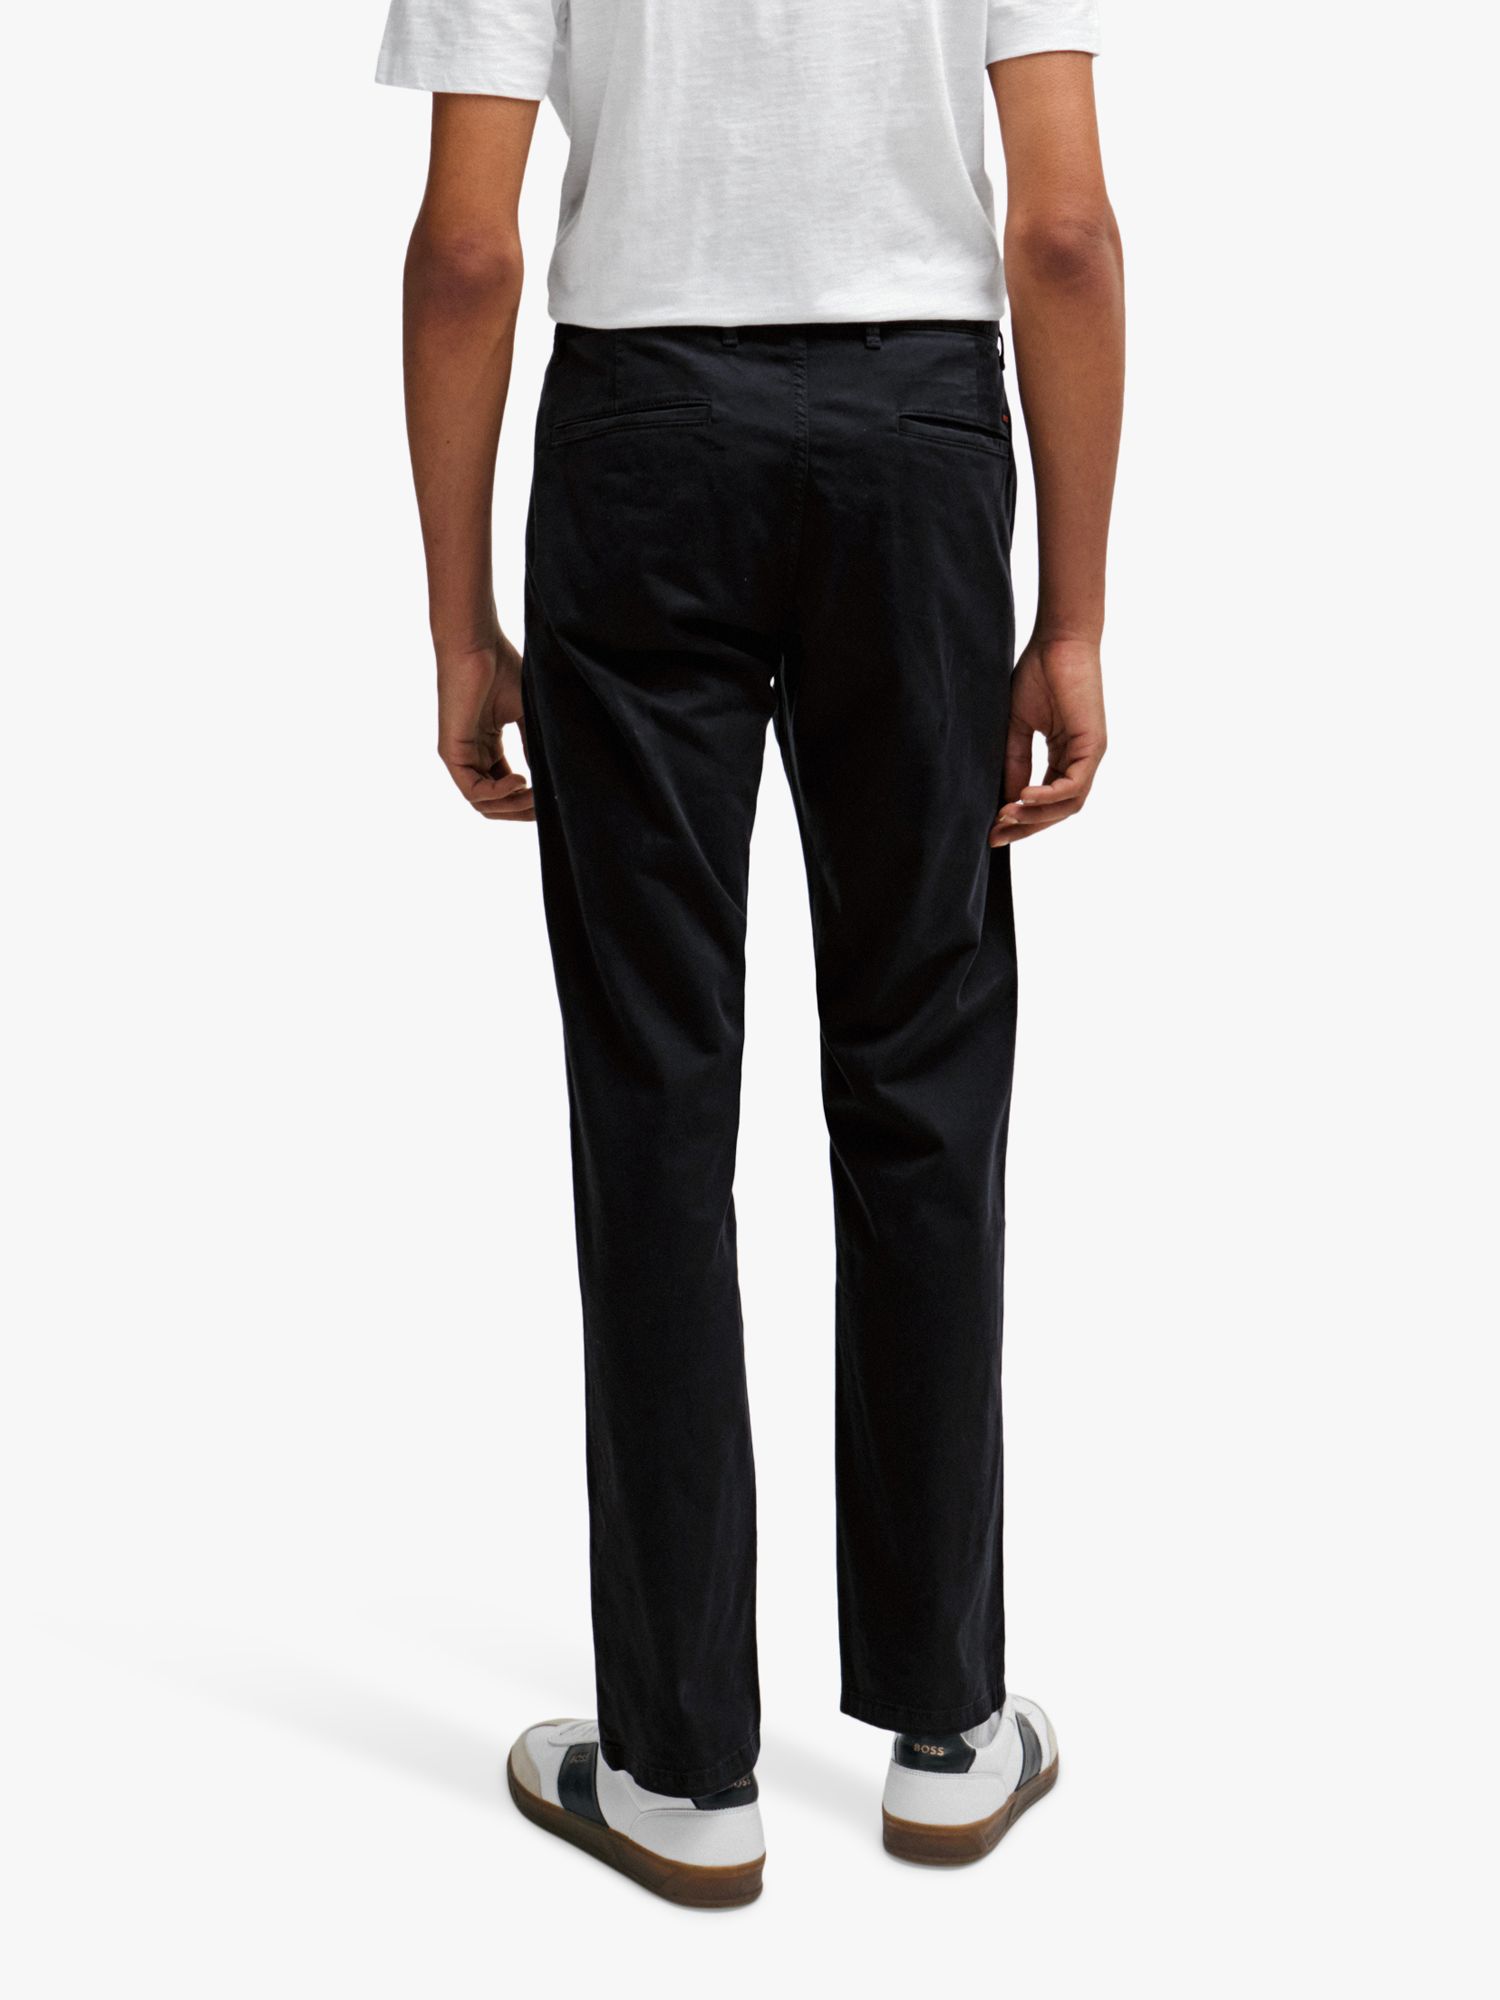 BOSS Slim Fit Chino Trousers, Black, 29L